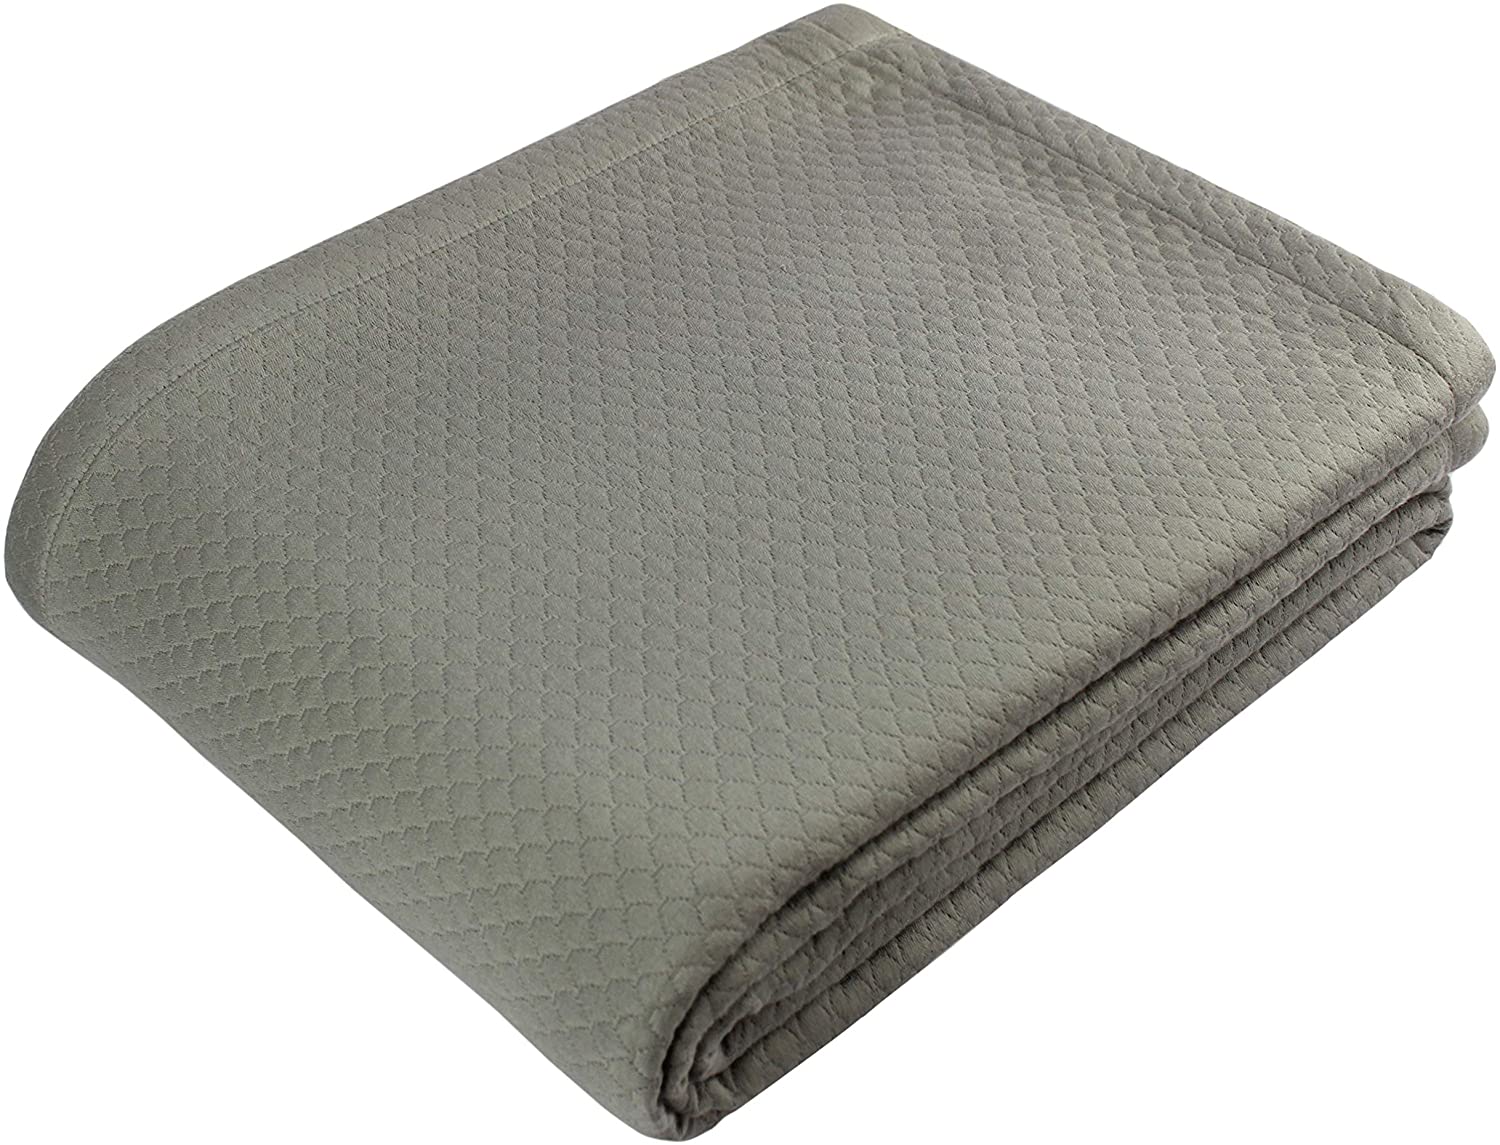 COTTON CRAFT Super Soft Premium Cotton Herringbone Twill Thermal Blanket Full/Queen Grey